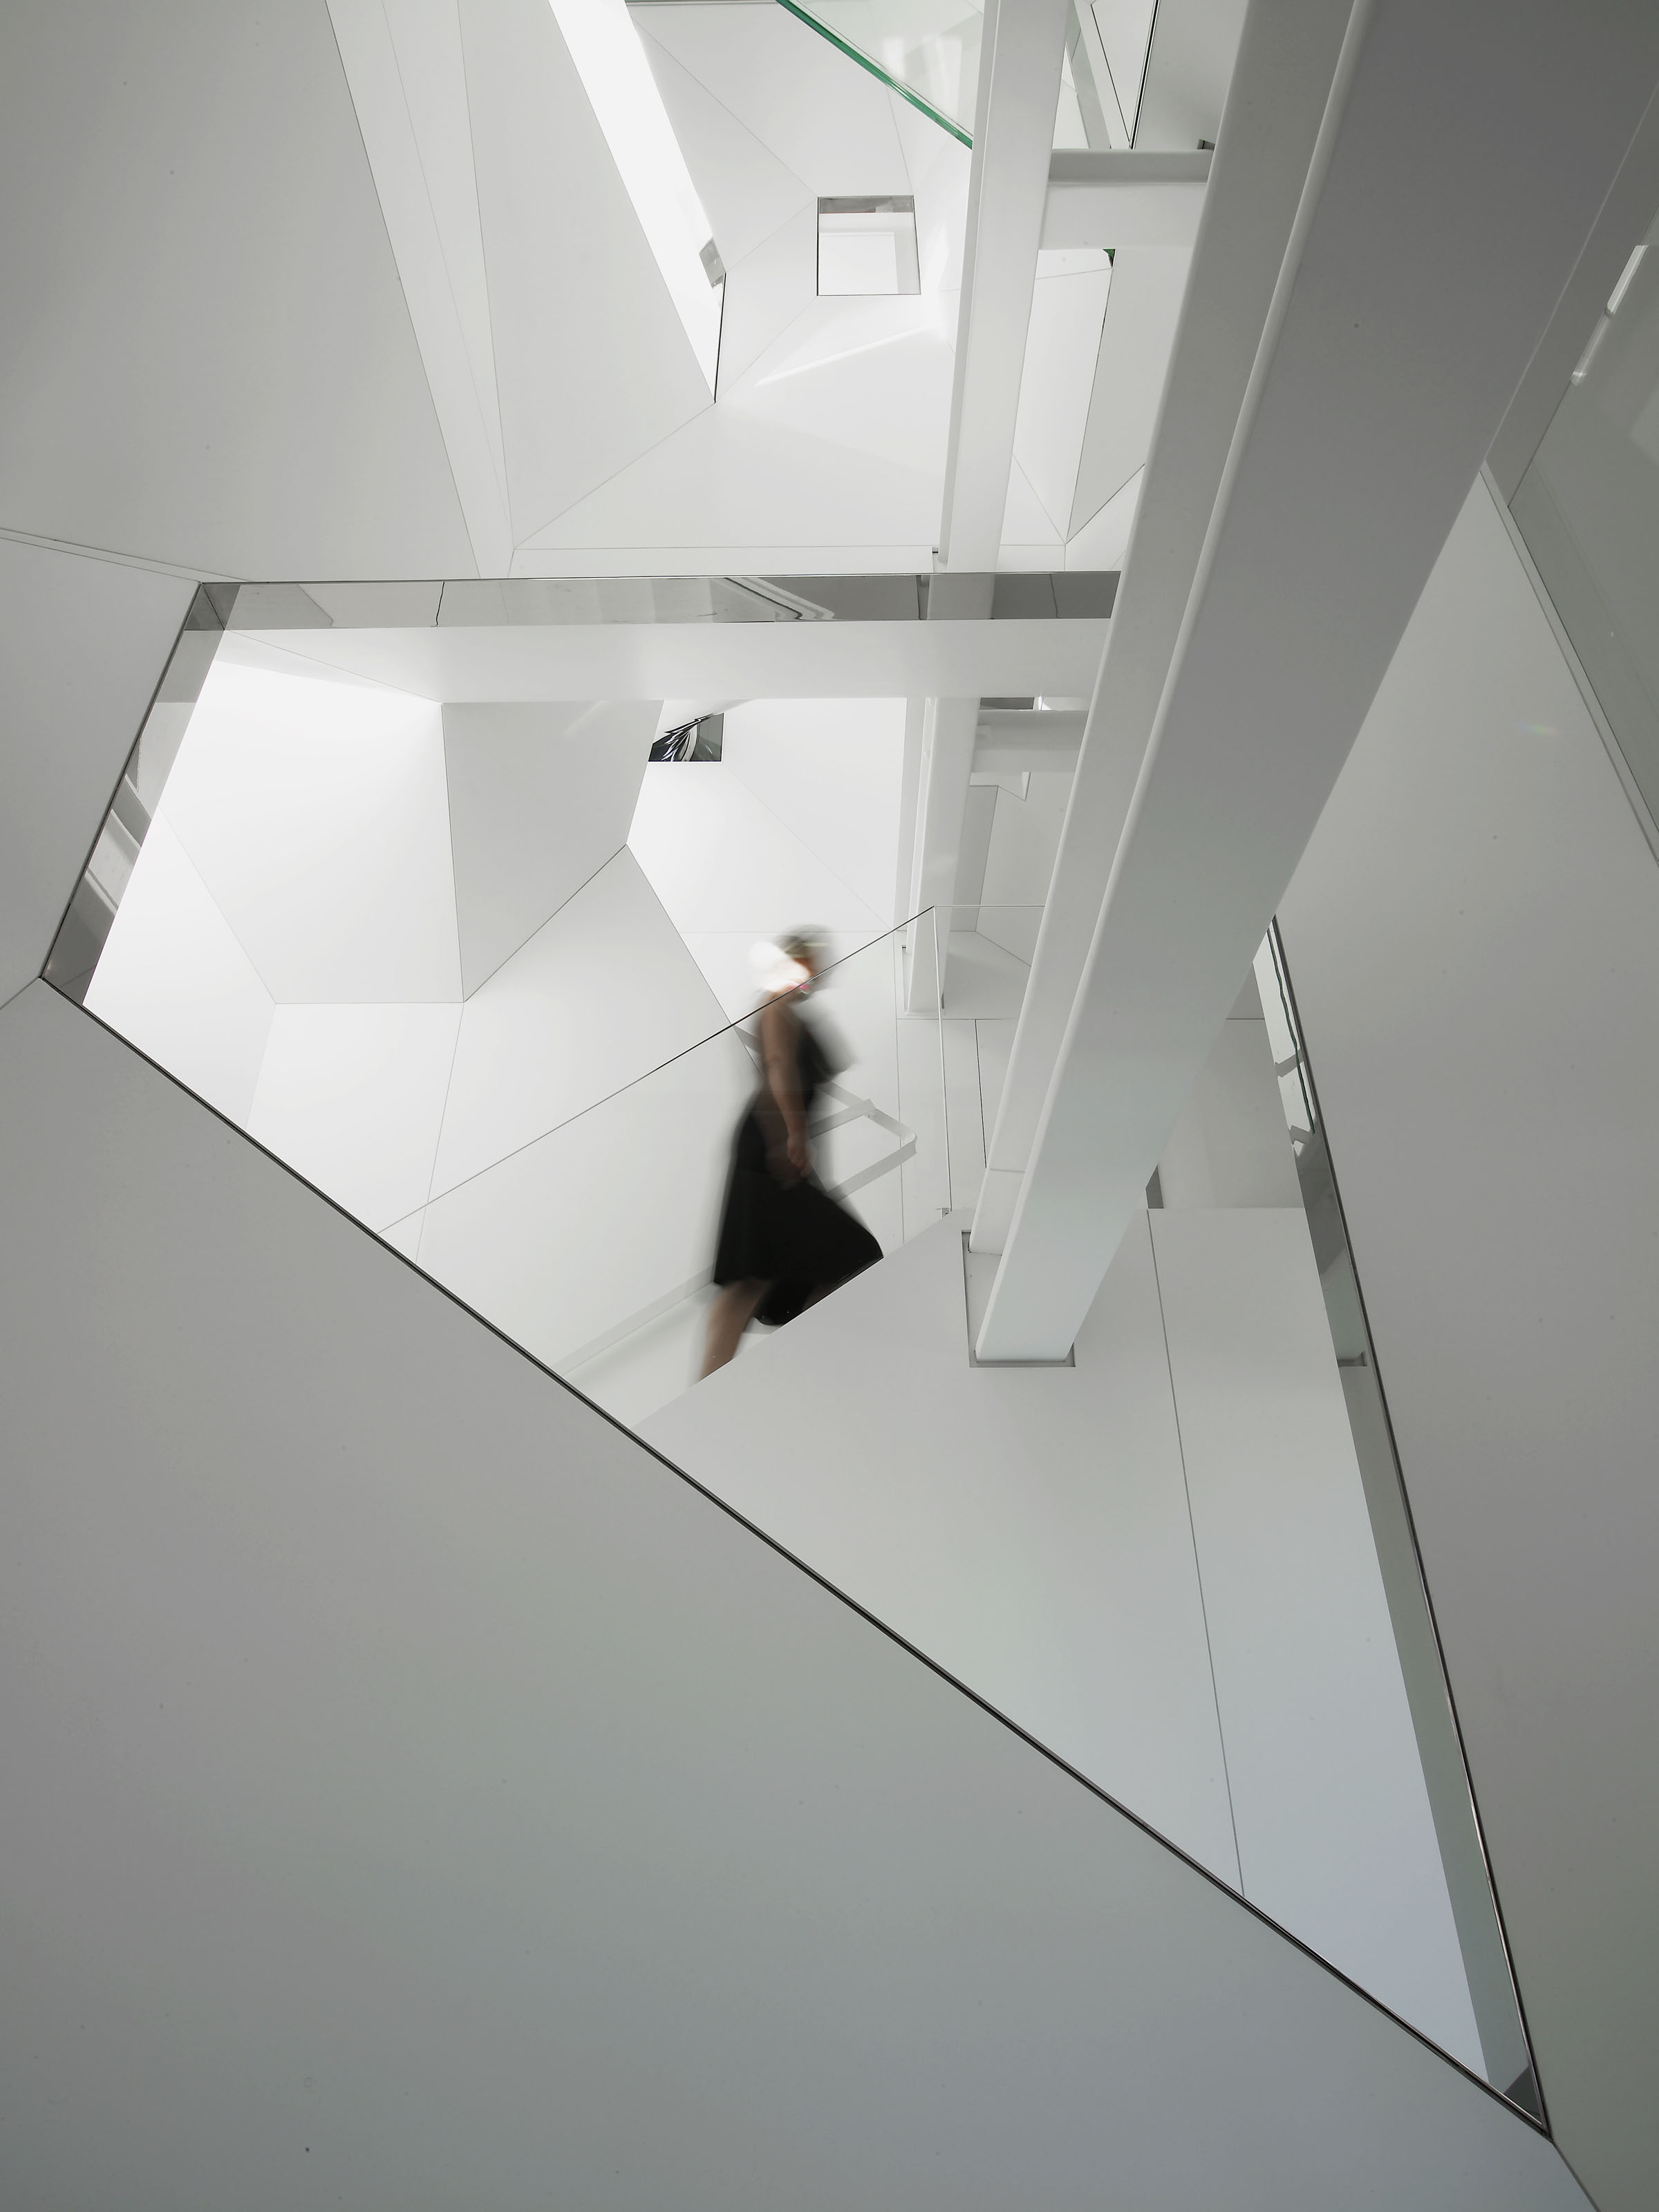 Skyhouse Entry - Stairwell / David Hotson Architect